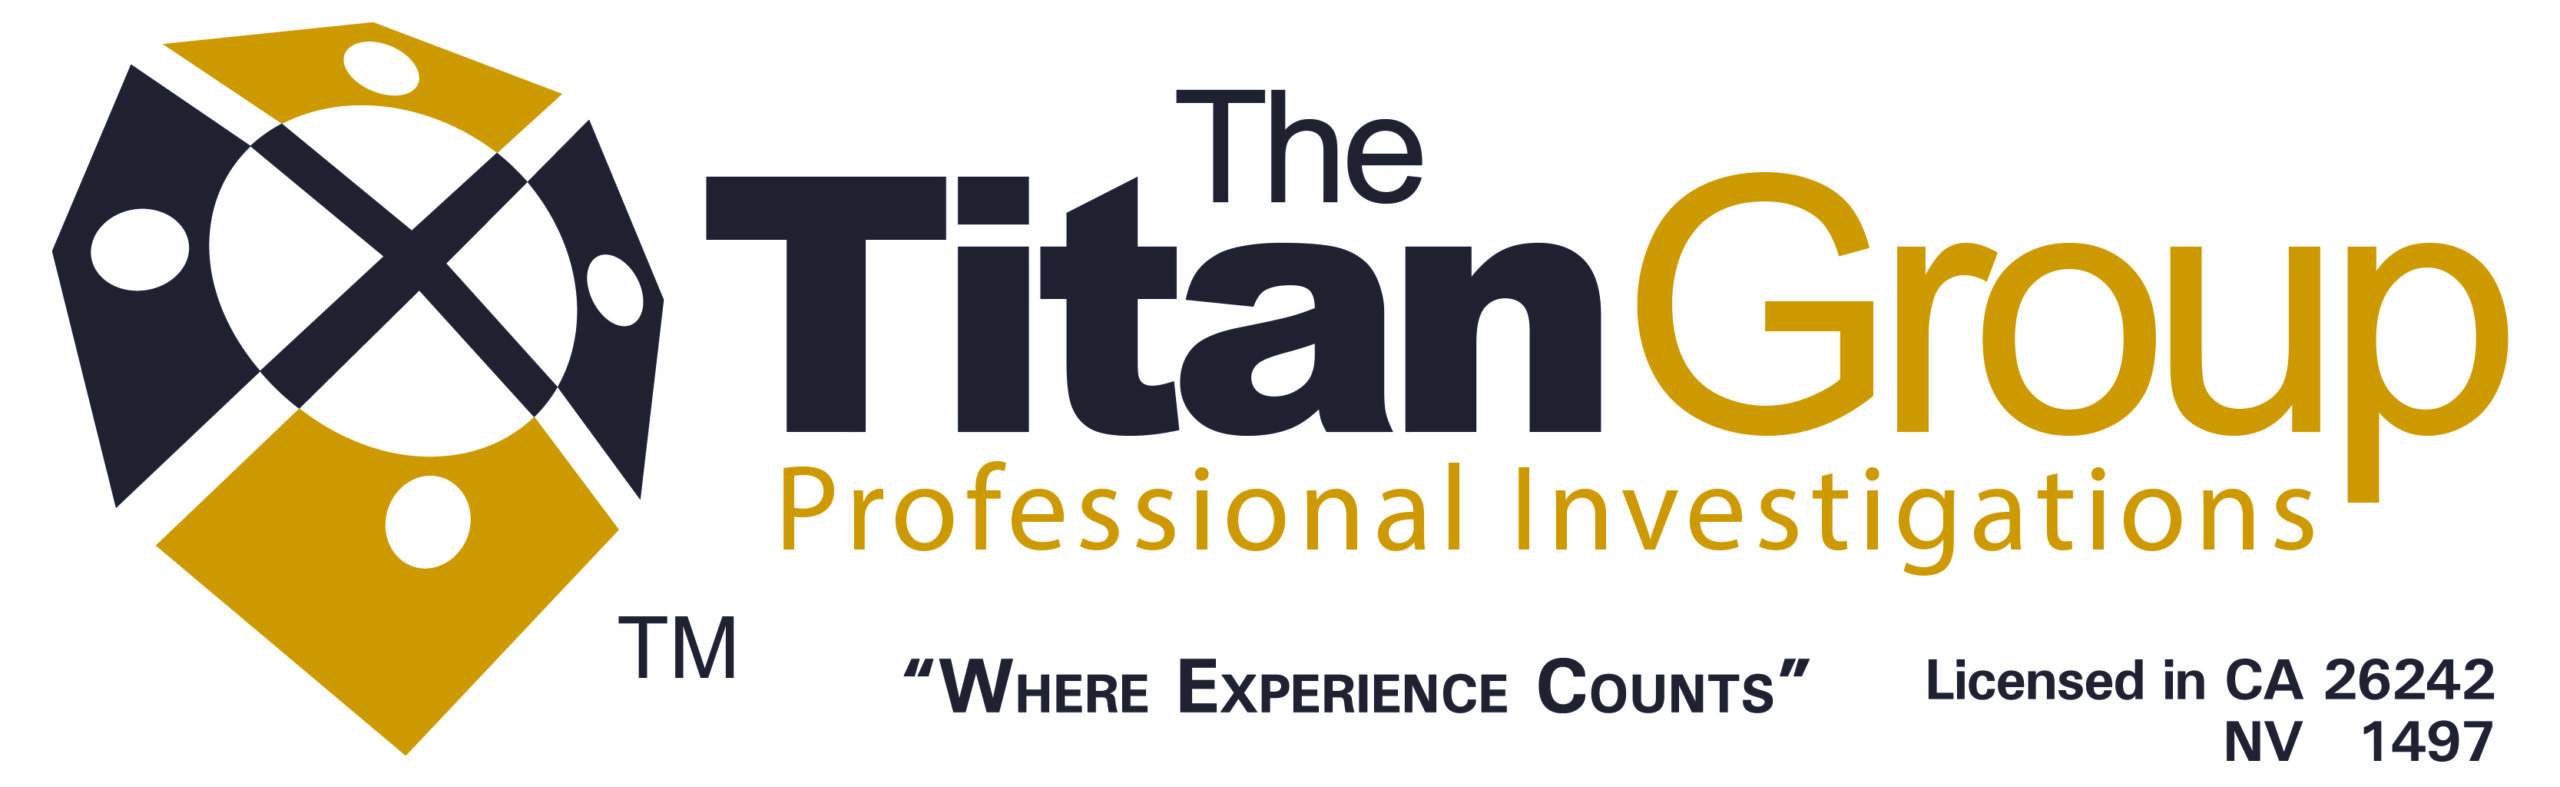 The Titan Group Private Investigations